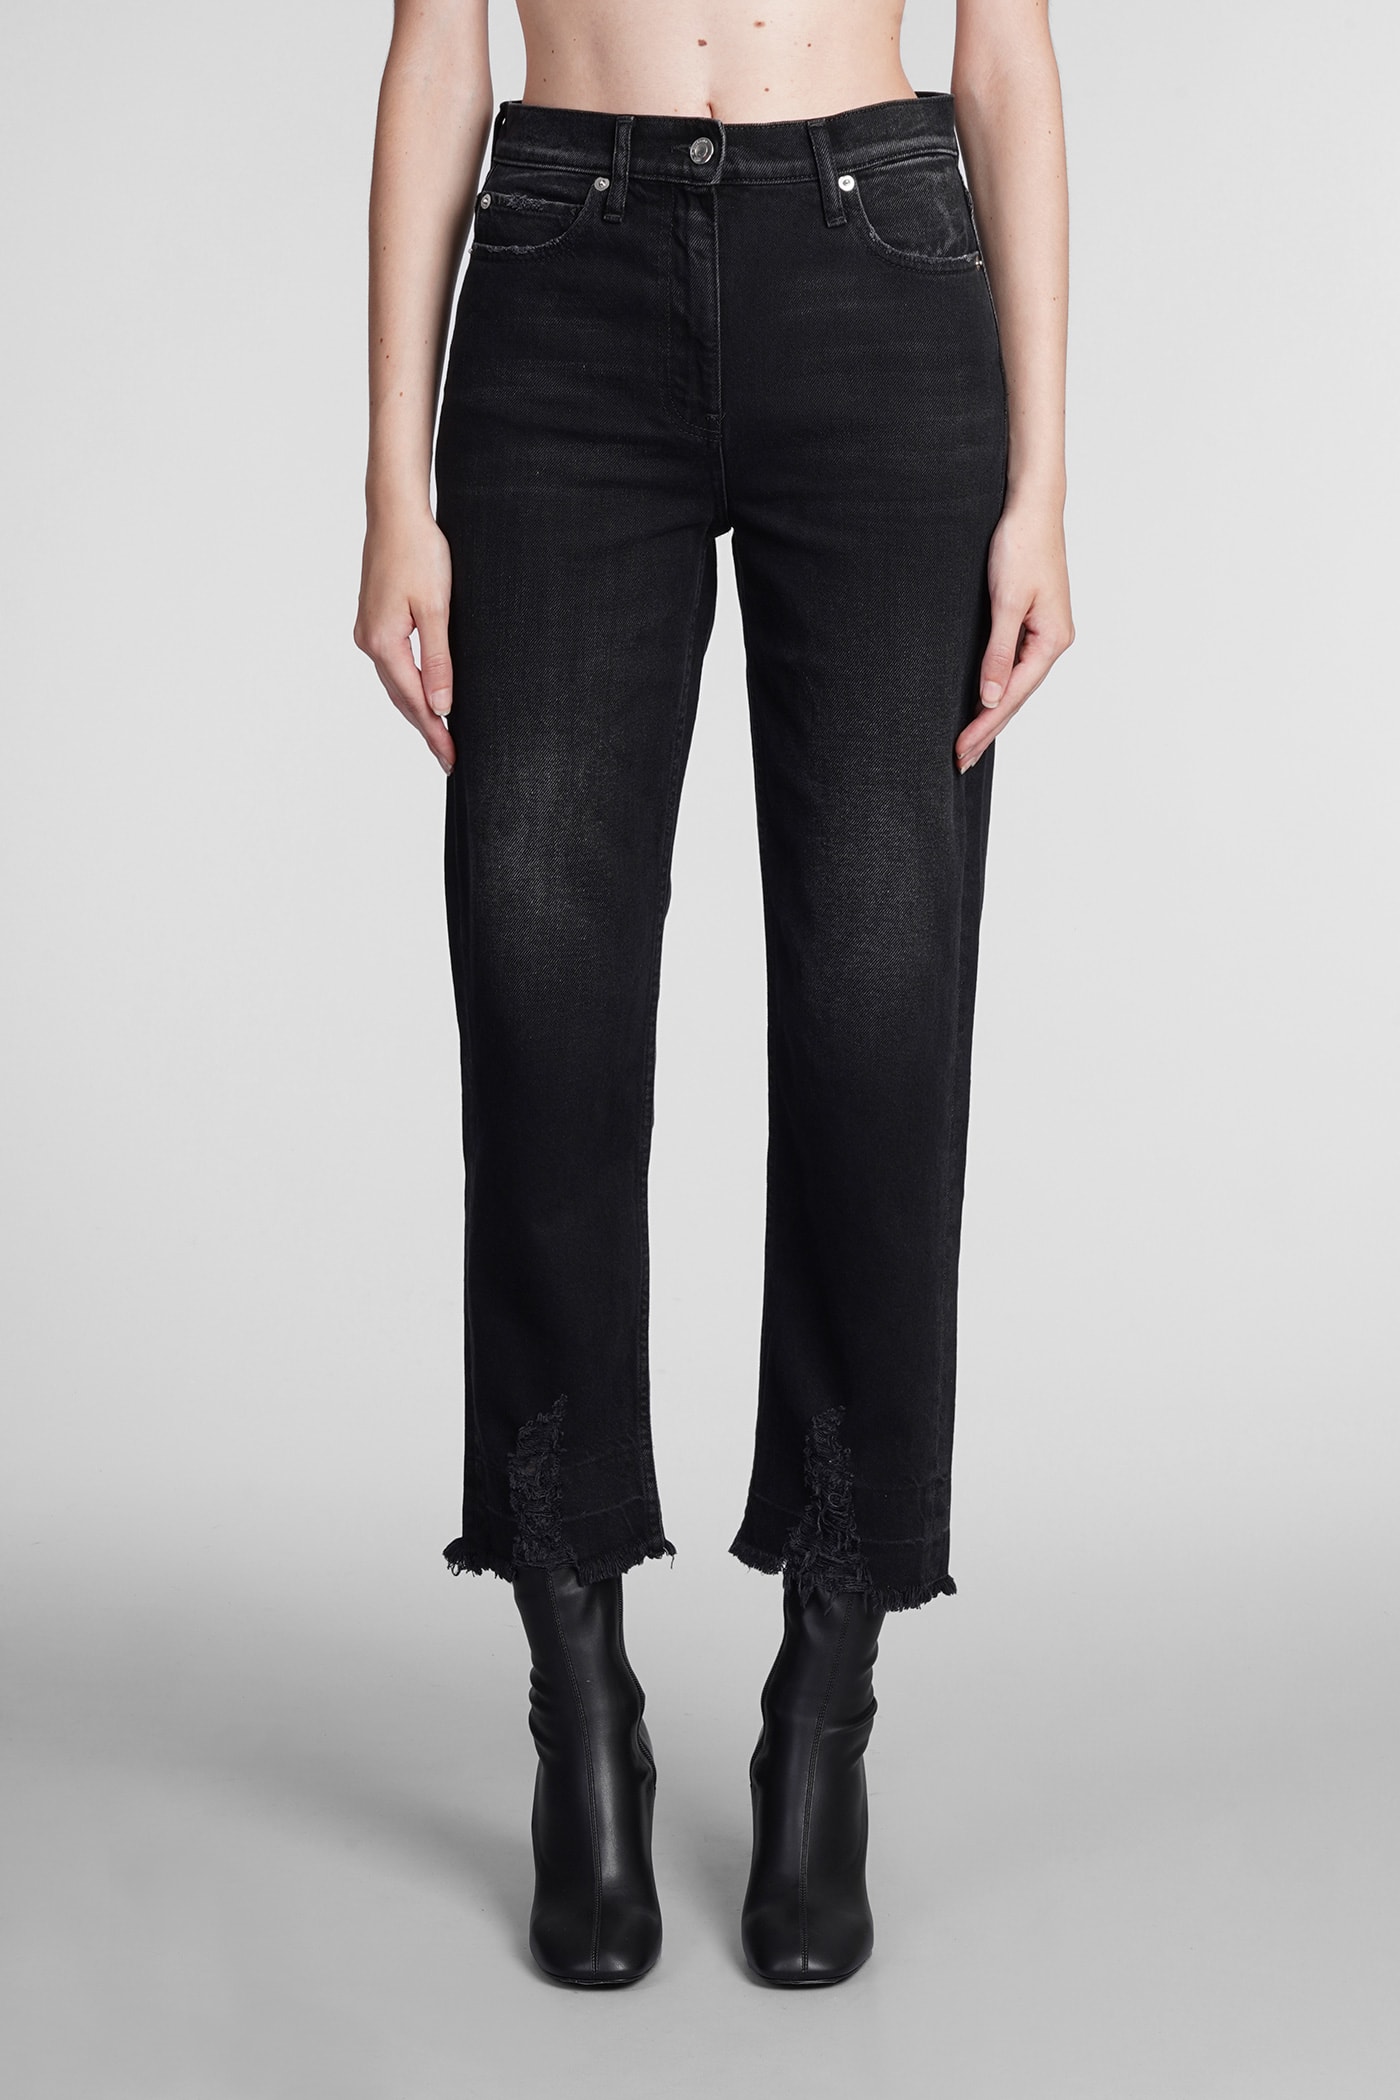 IRO Redon Jeans In Black Polyester